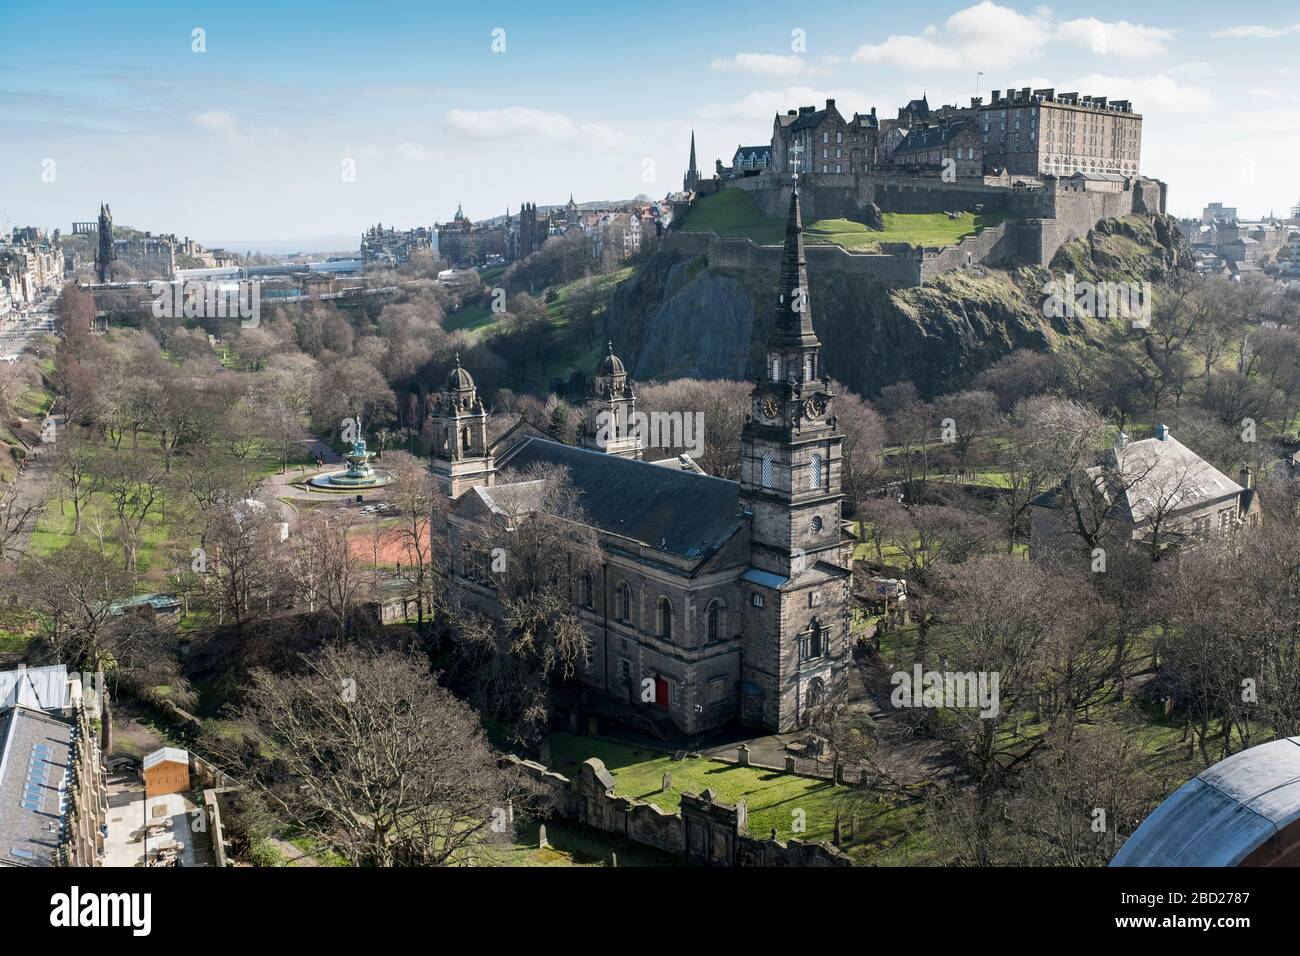 Vistas a la iglesia parroquial de St Cuthbert y al castillo de Edimburgo. Foto de stock